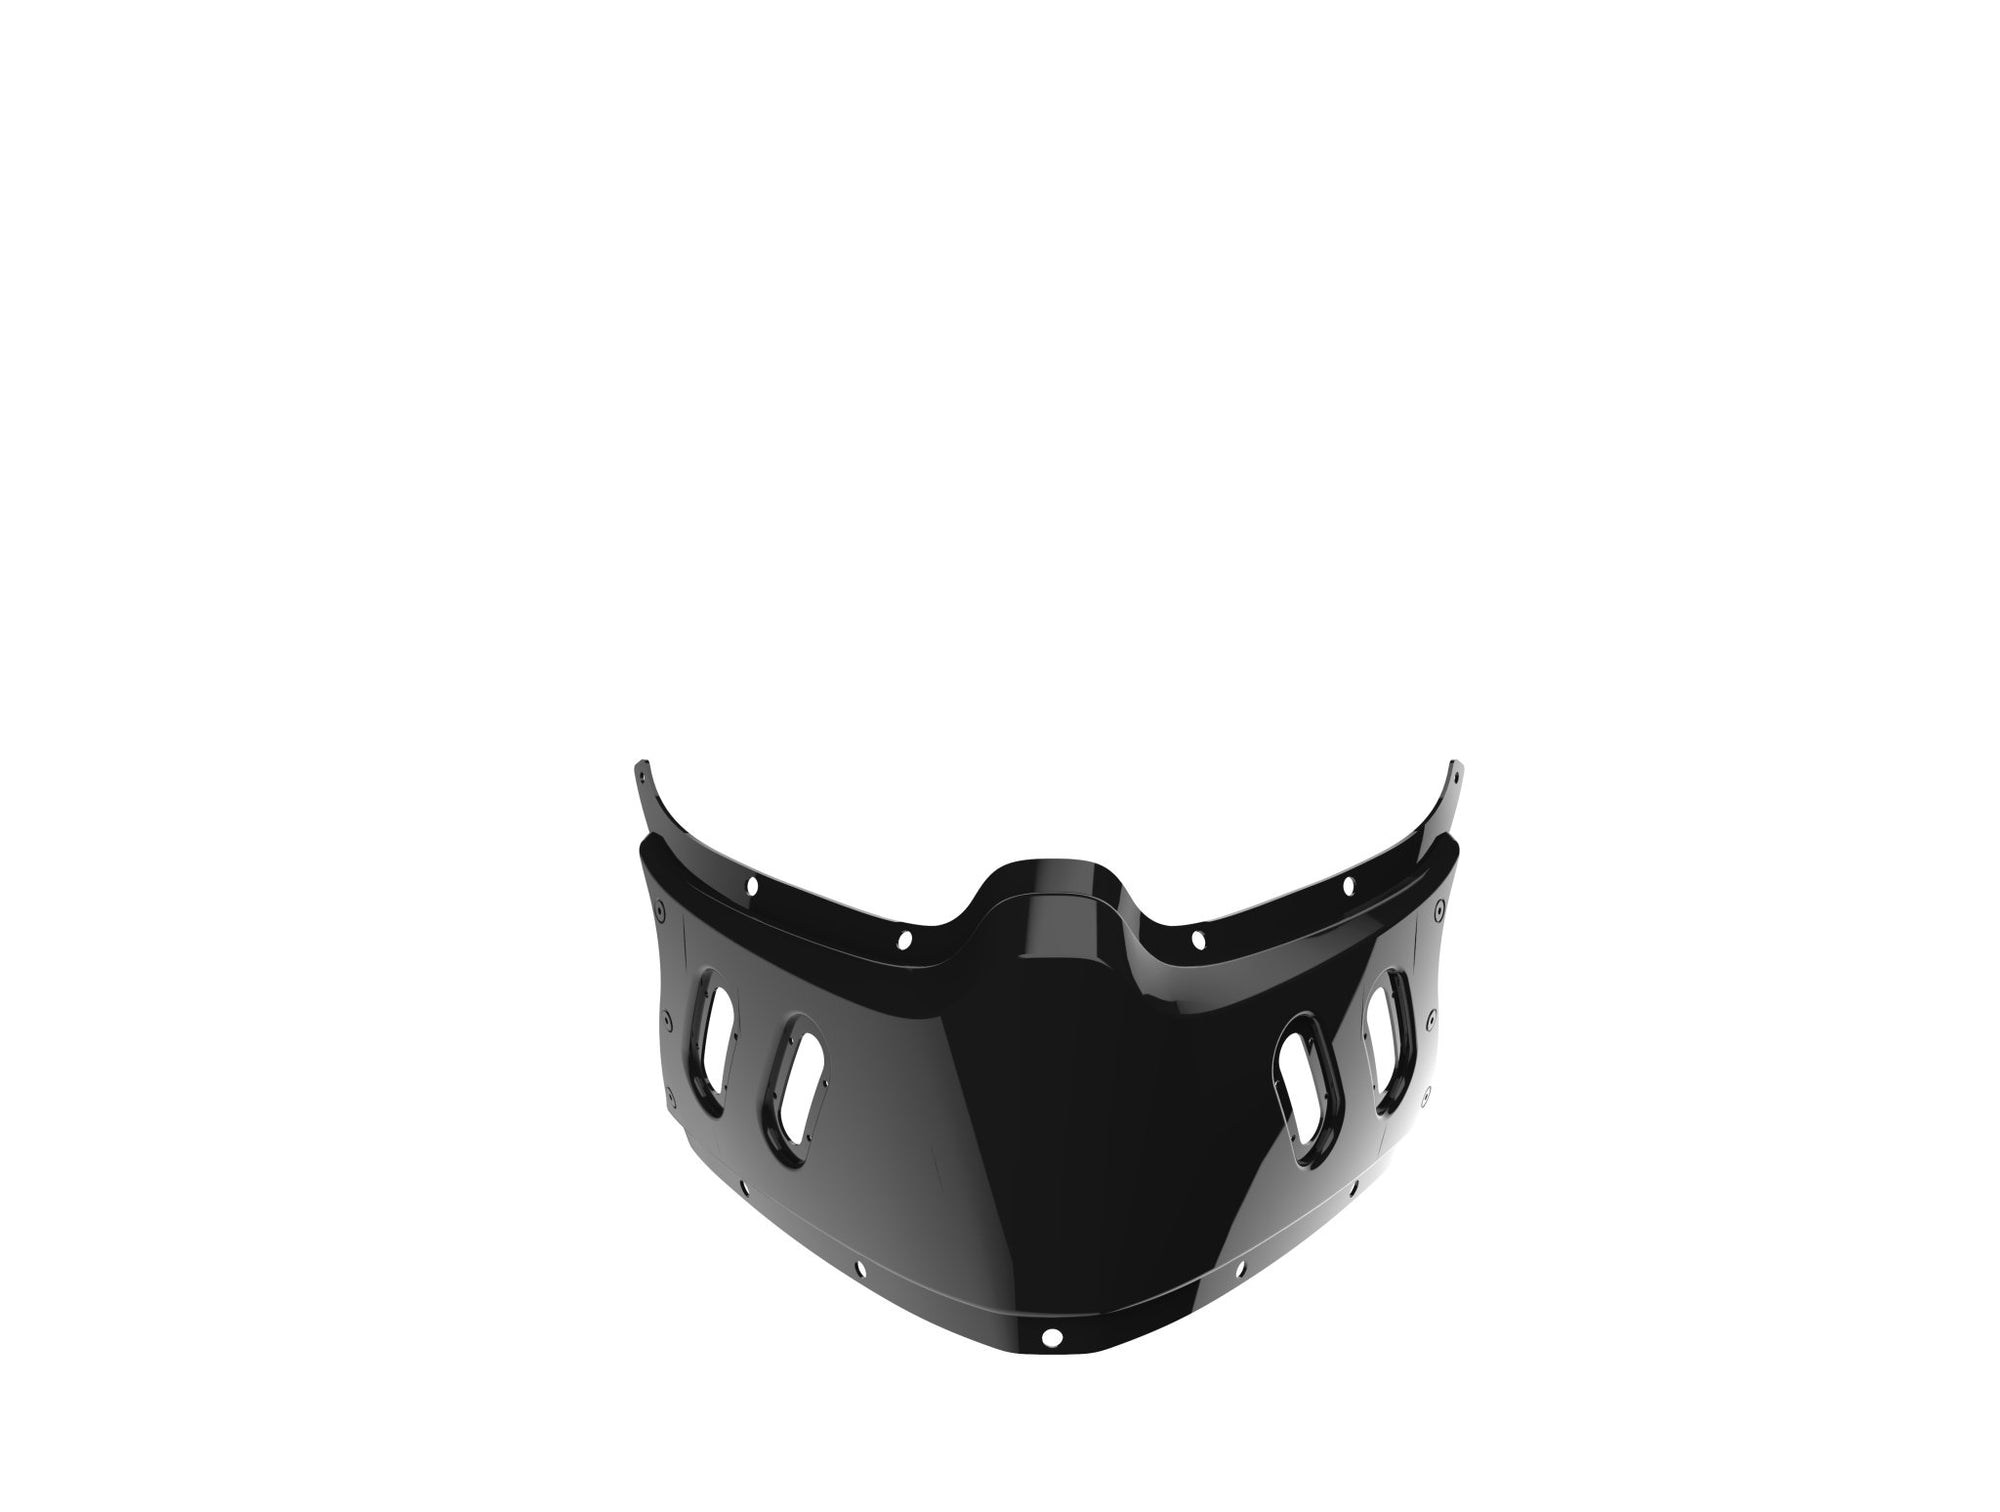 Qwart - Qwart Carbon Mask chin guard cover Accessory Kit for Phoenix Standard and Slick Helmets - Helmet Accessories - Salt Flats Clothing